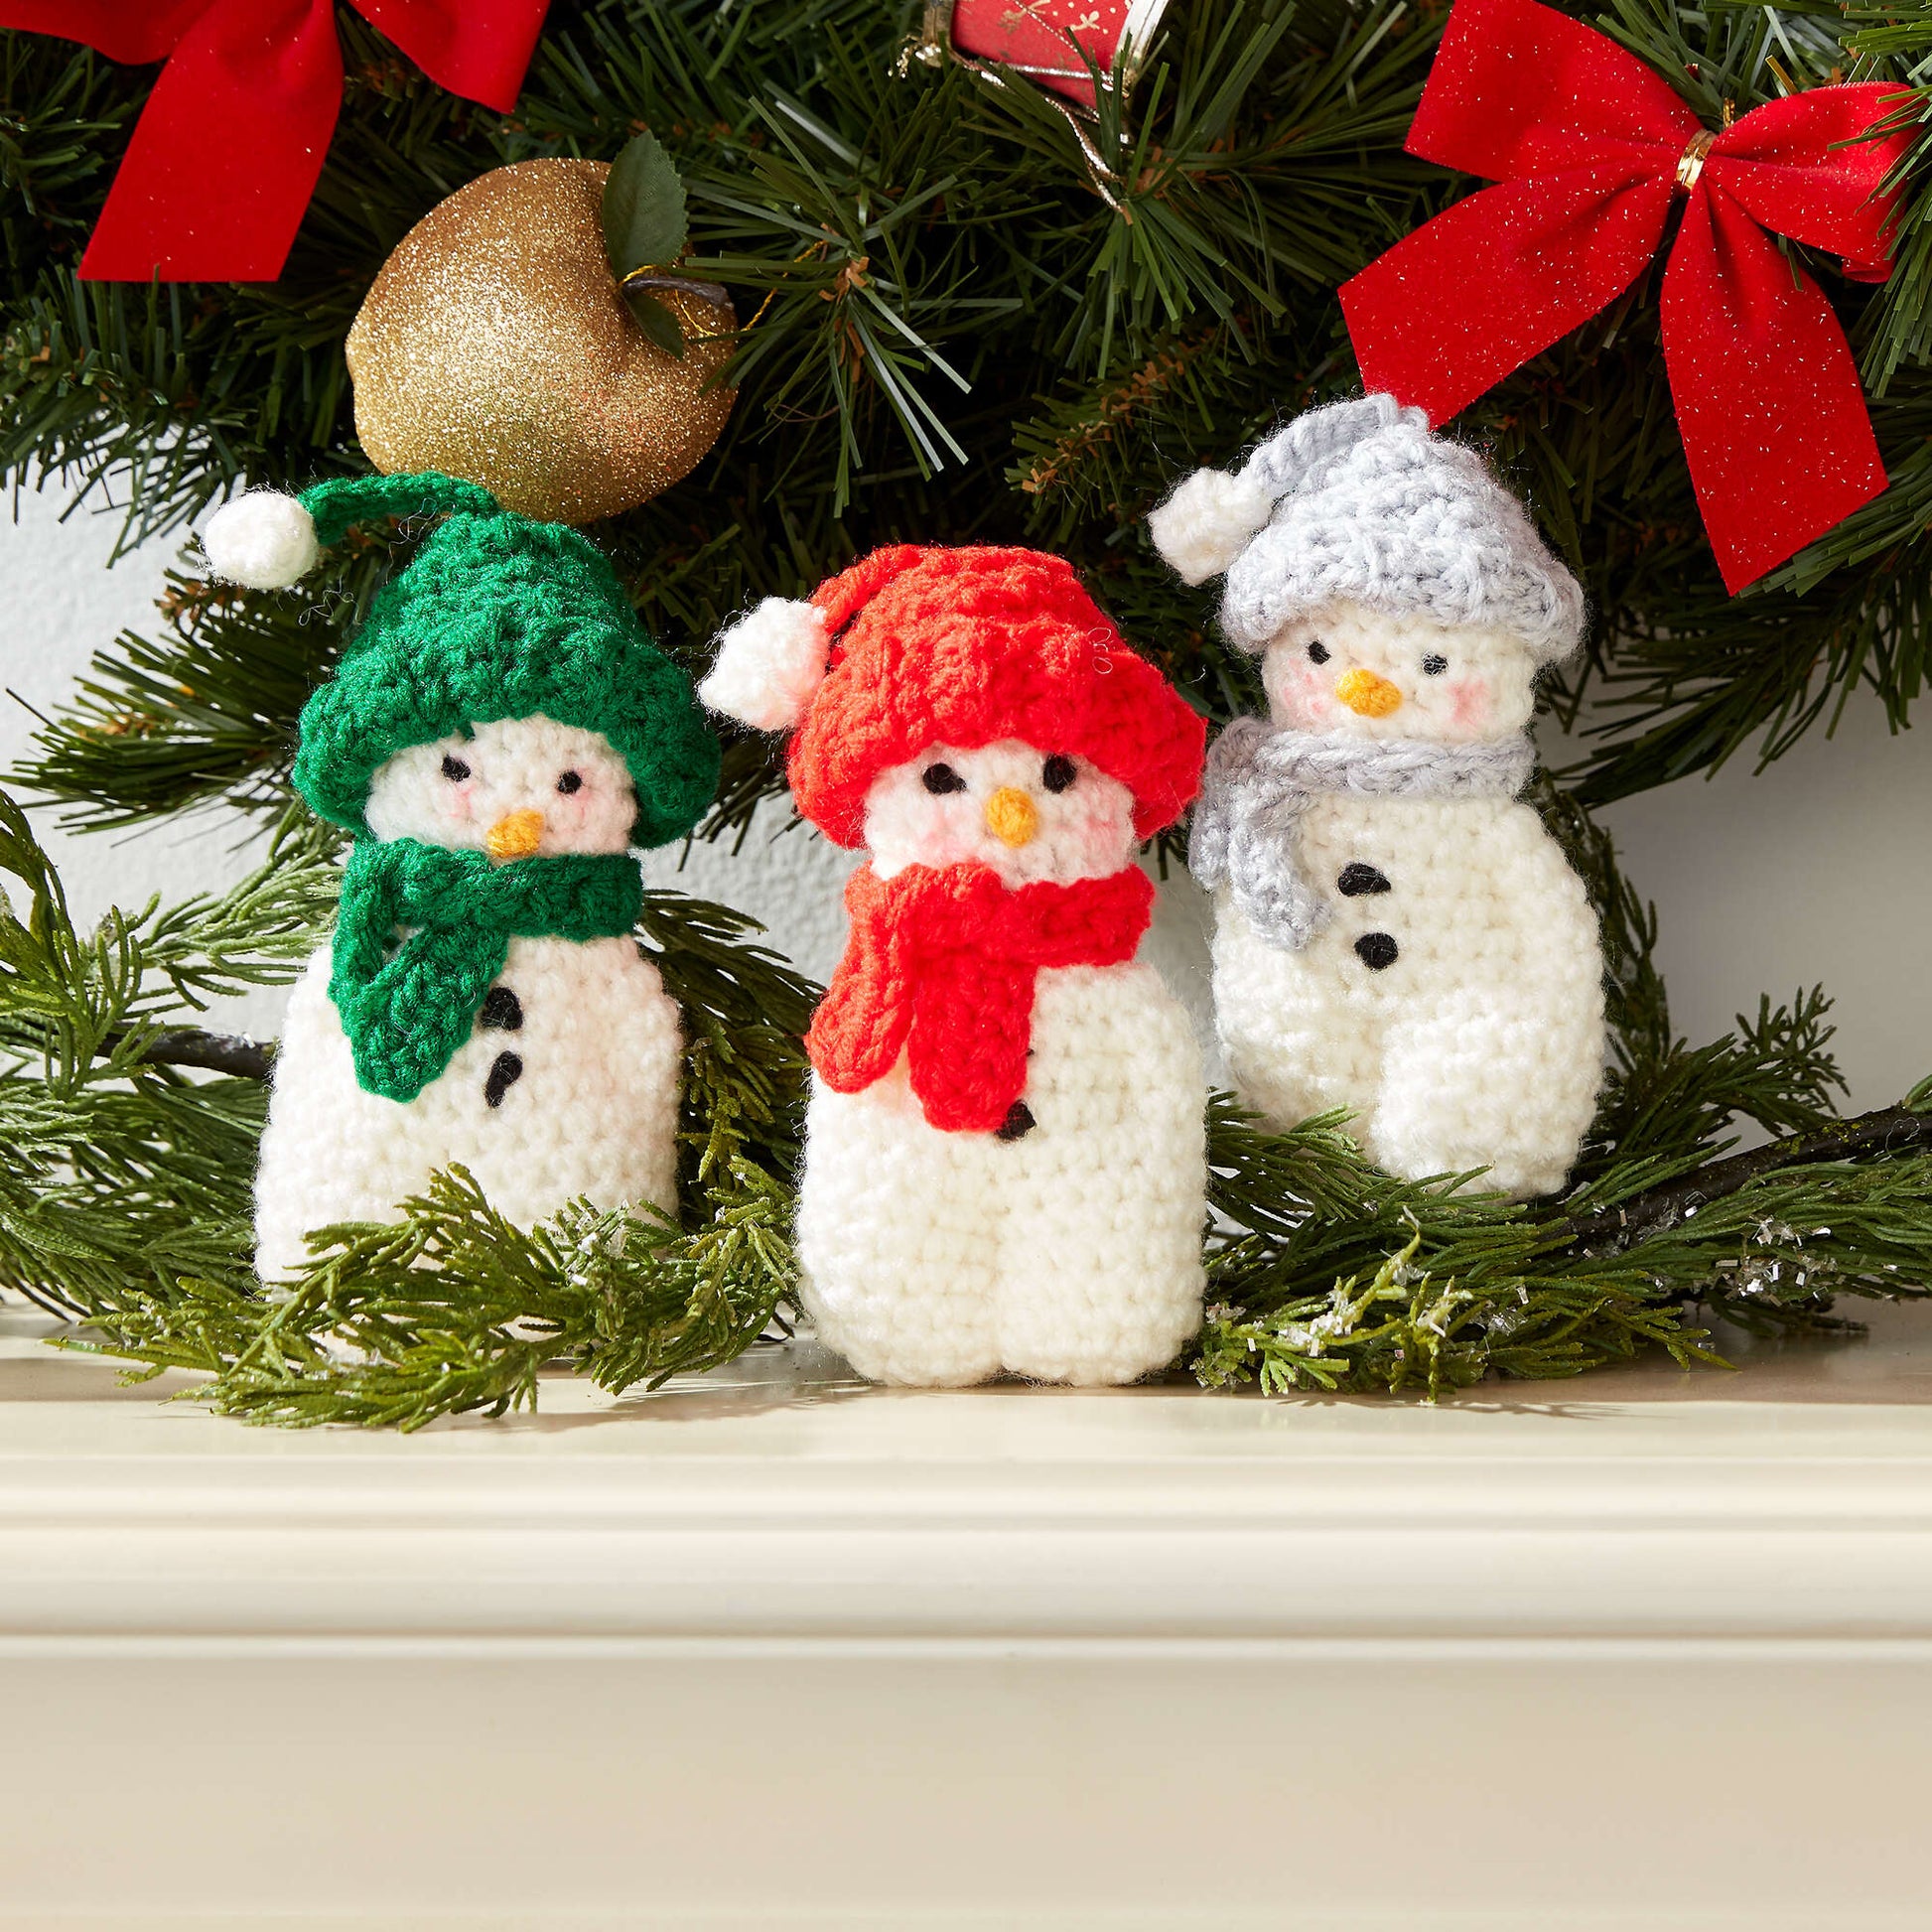 Free Red Heart Three Tiny Snowman Ornaments Crochet Pattern